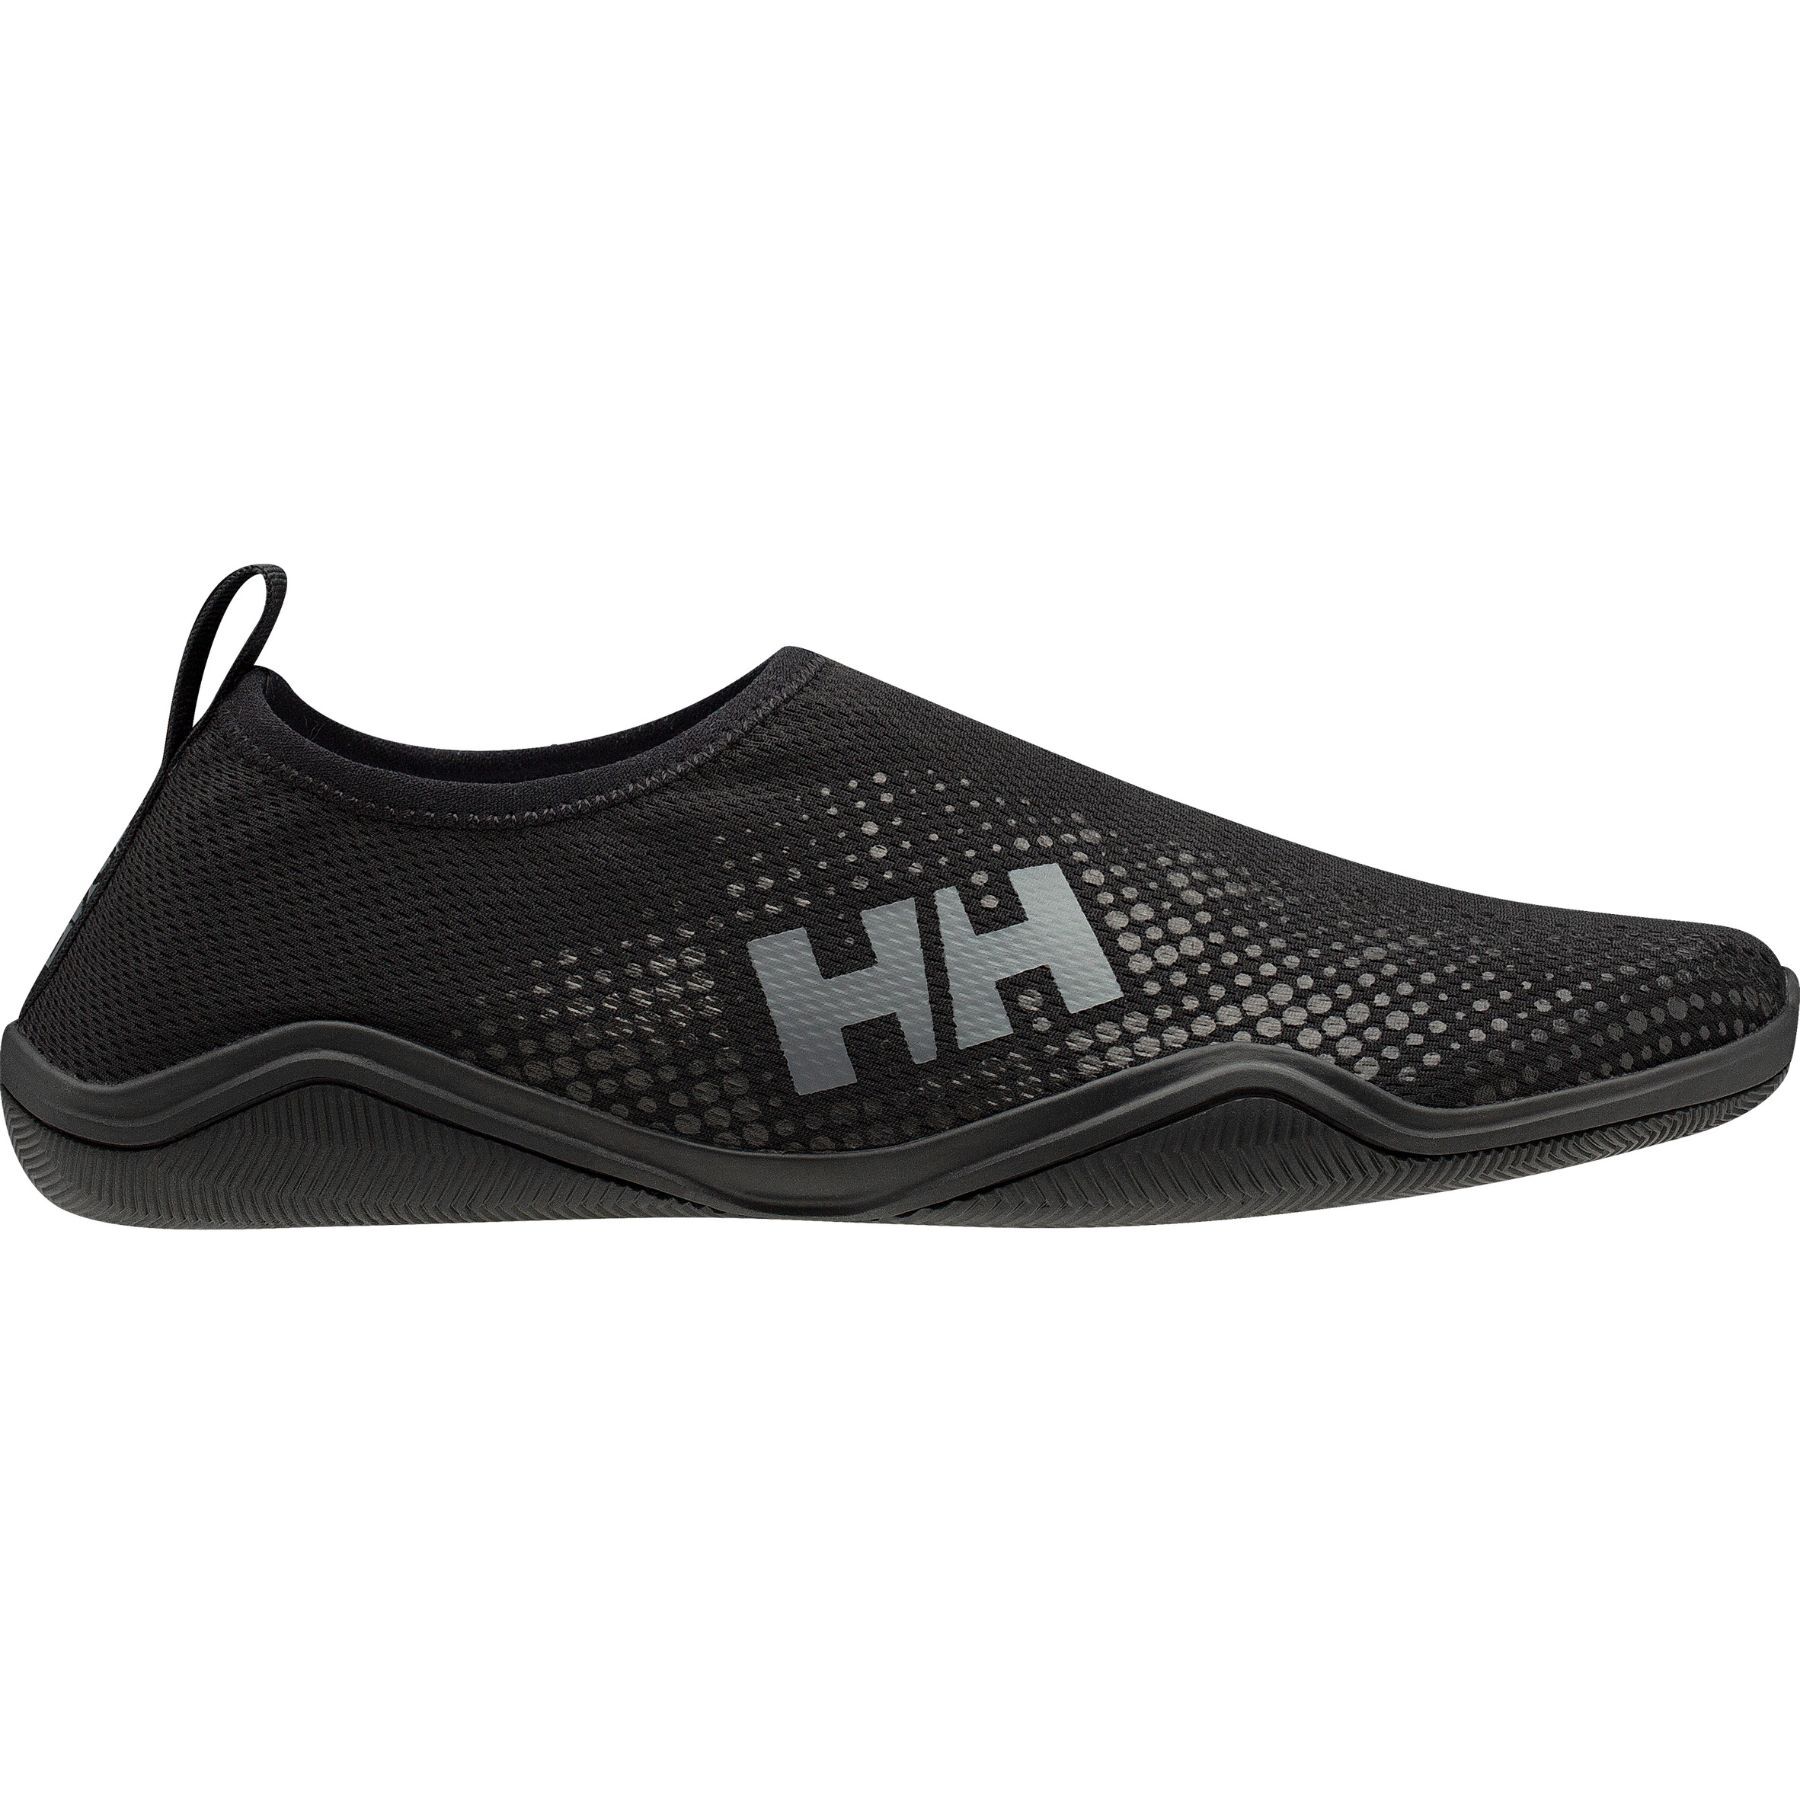 Helly Hansen Crest Watermoc - Shoes - Men's